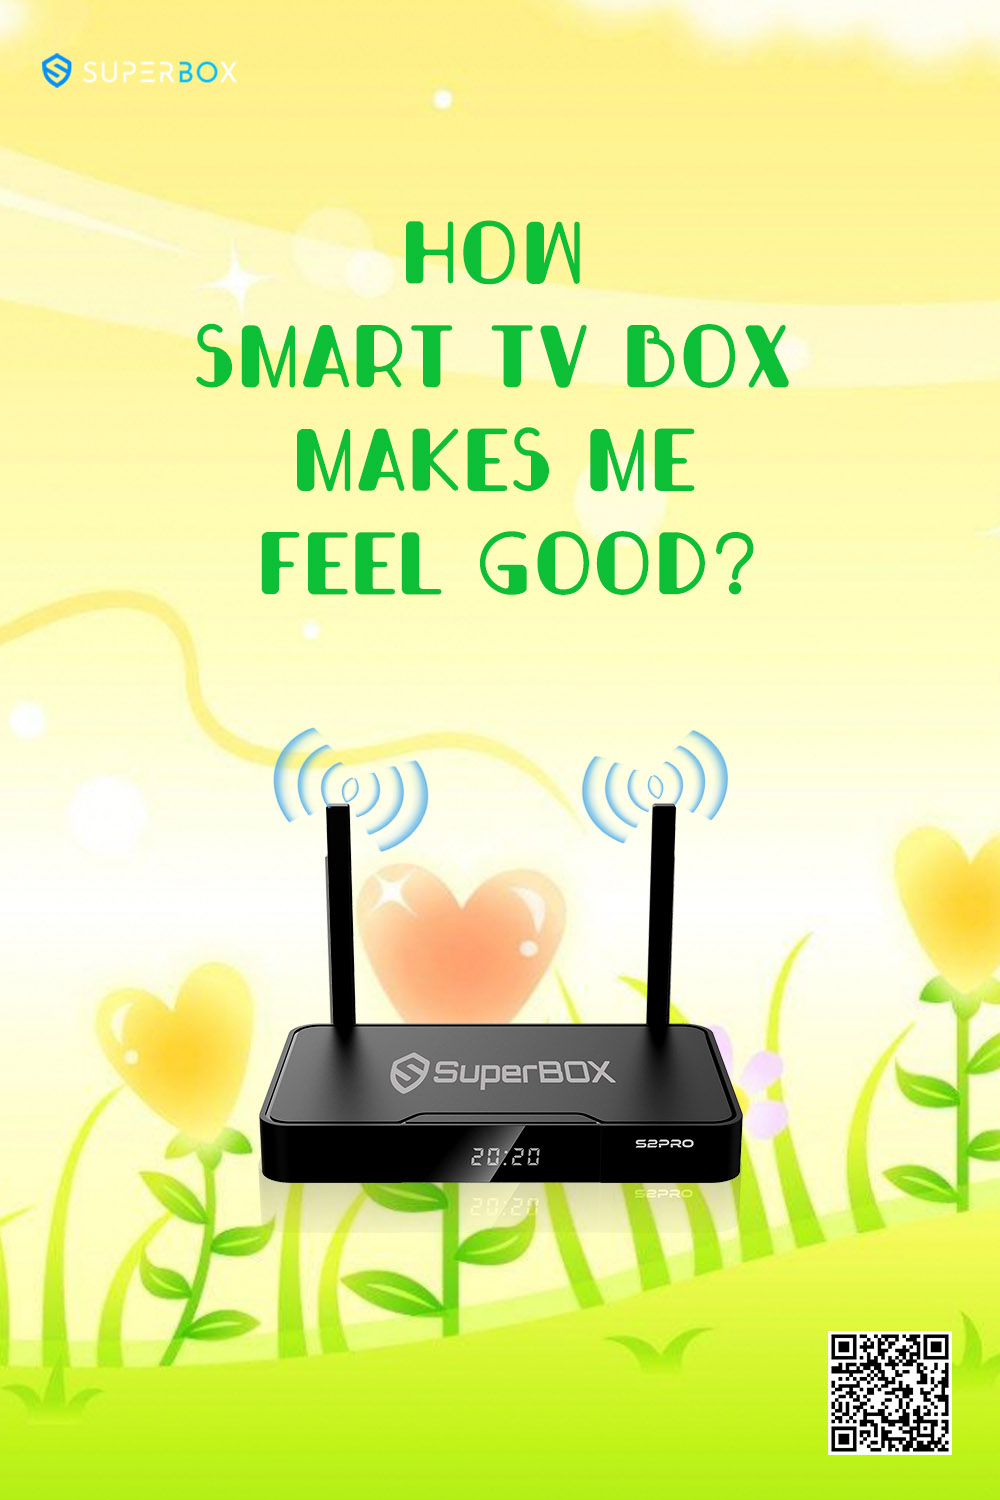 How Smart TV Box Makes me Feel Good?